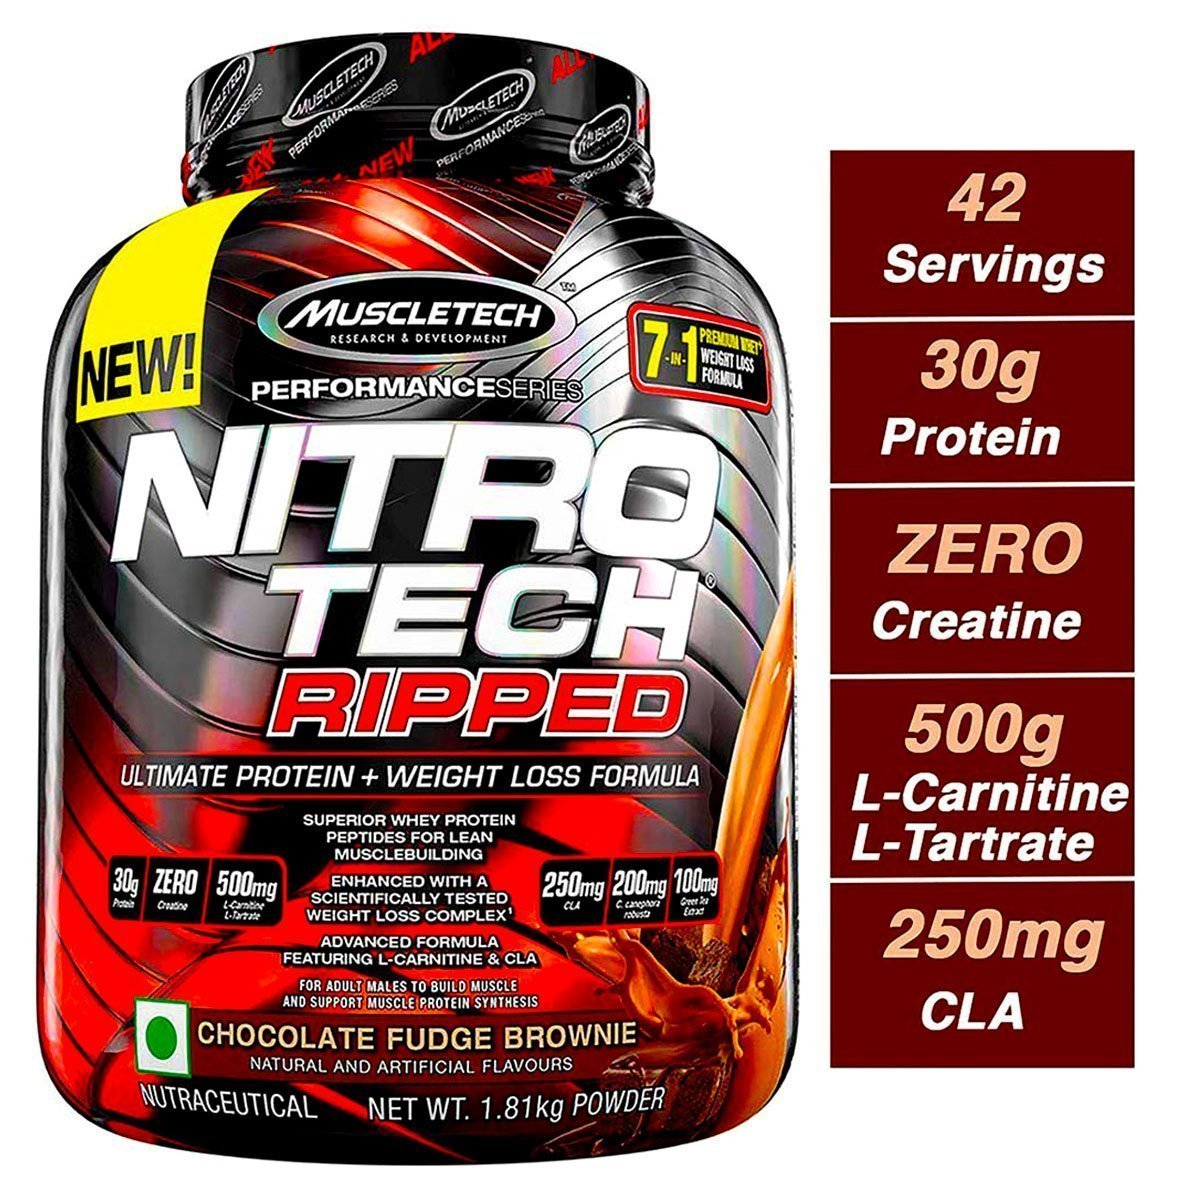 Muscletech Performance Series Nitro Tech Ripped